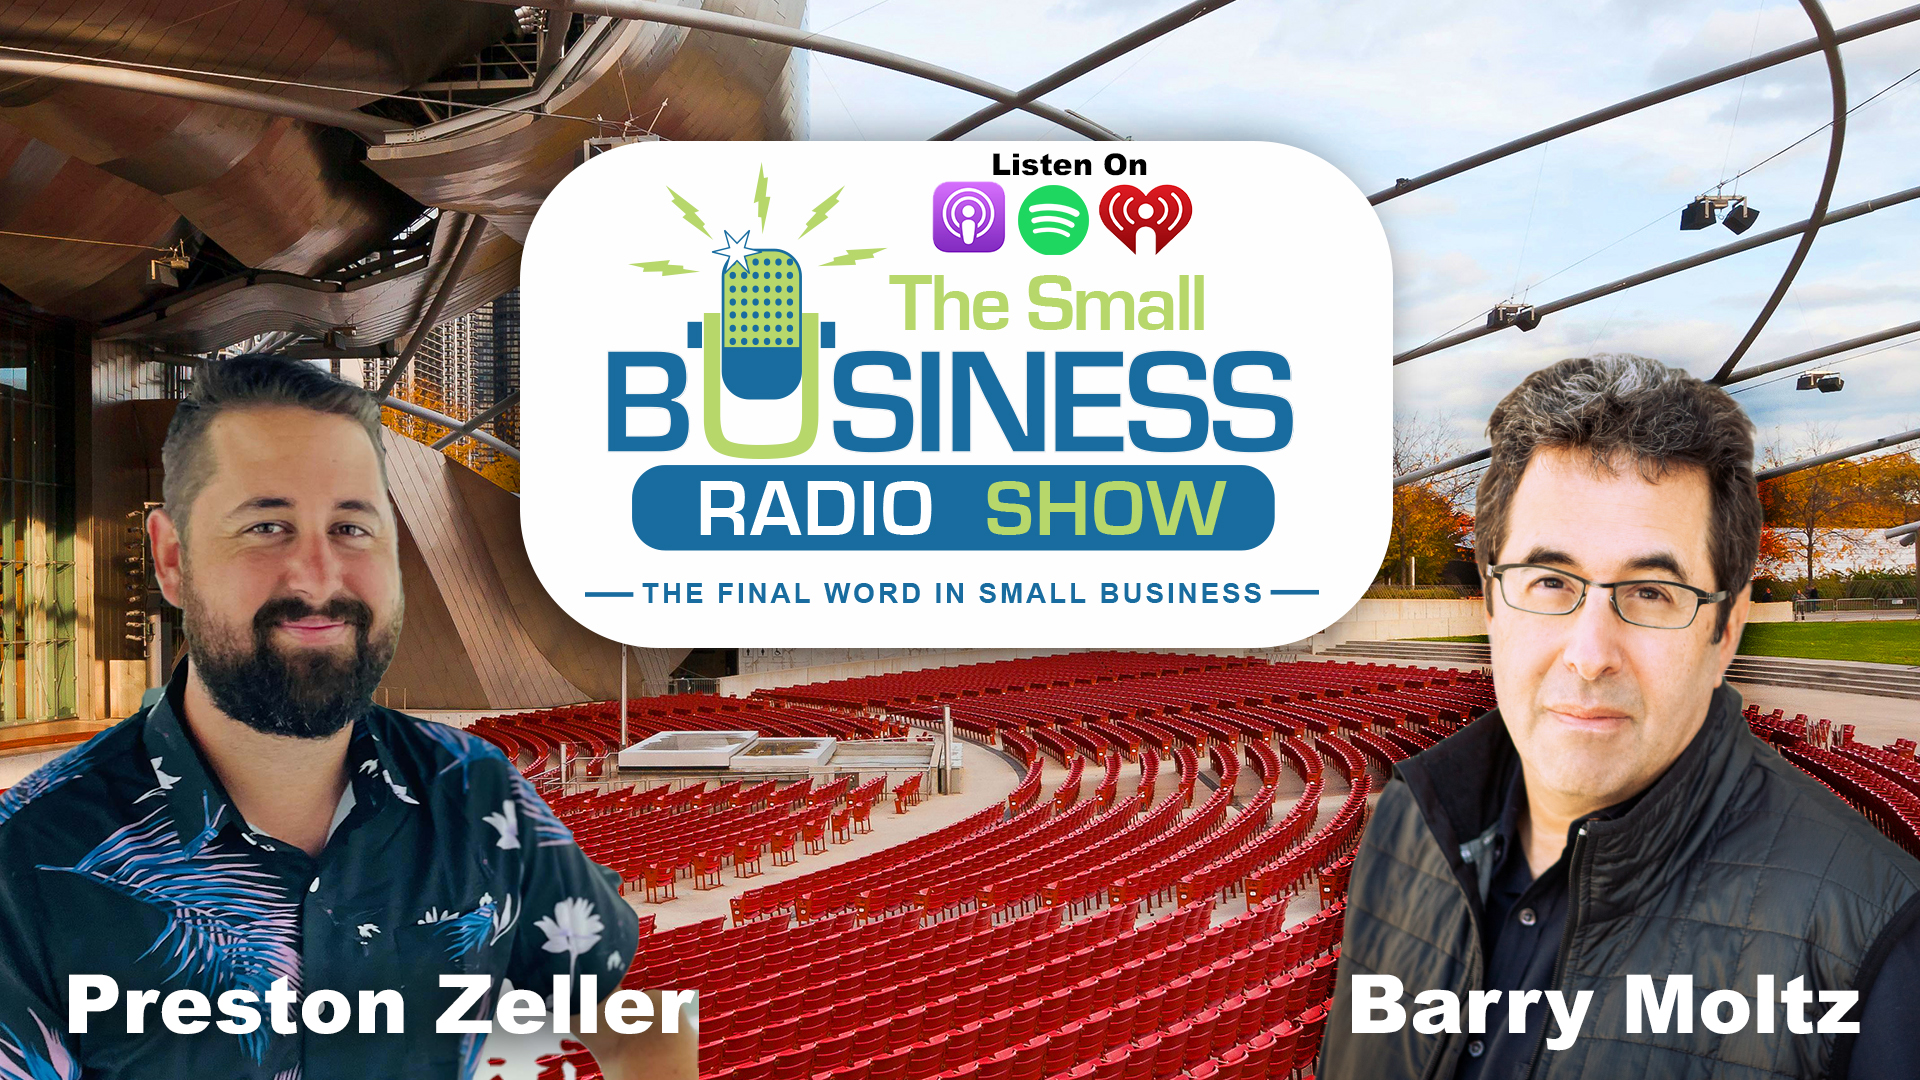 Preston Zeller on The Small Business Radio Show